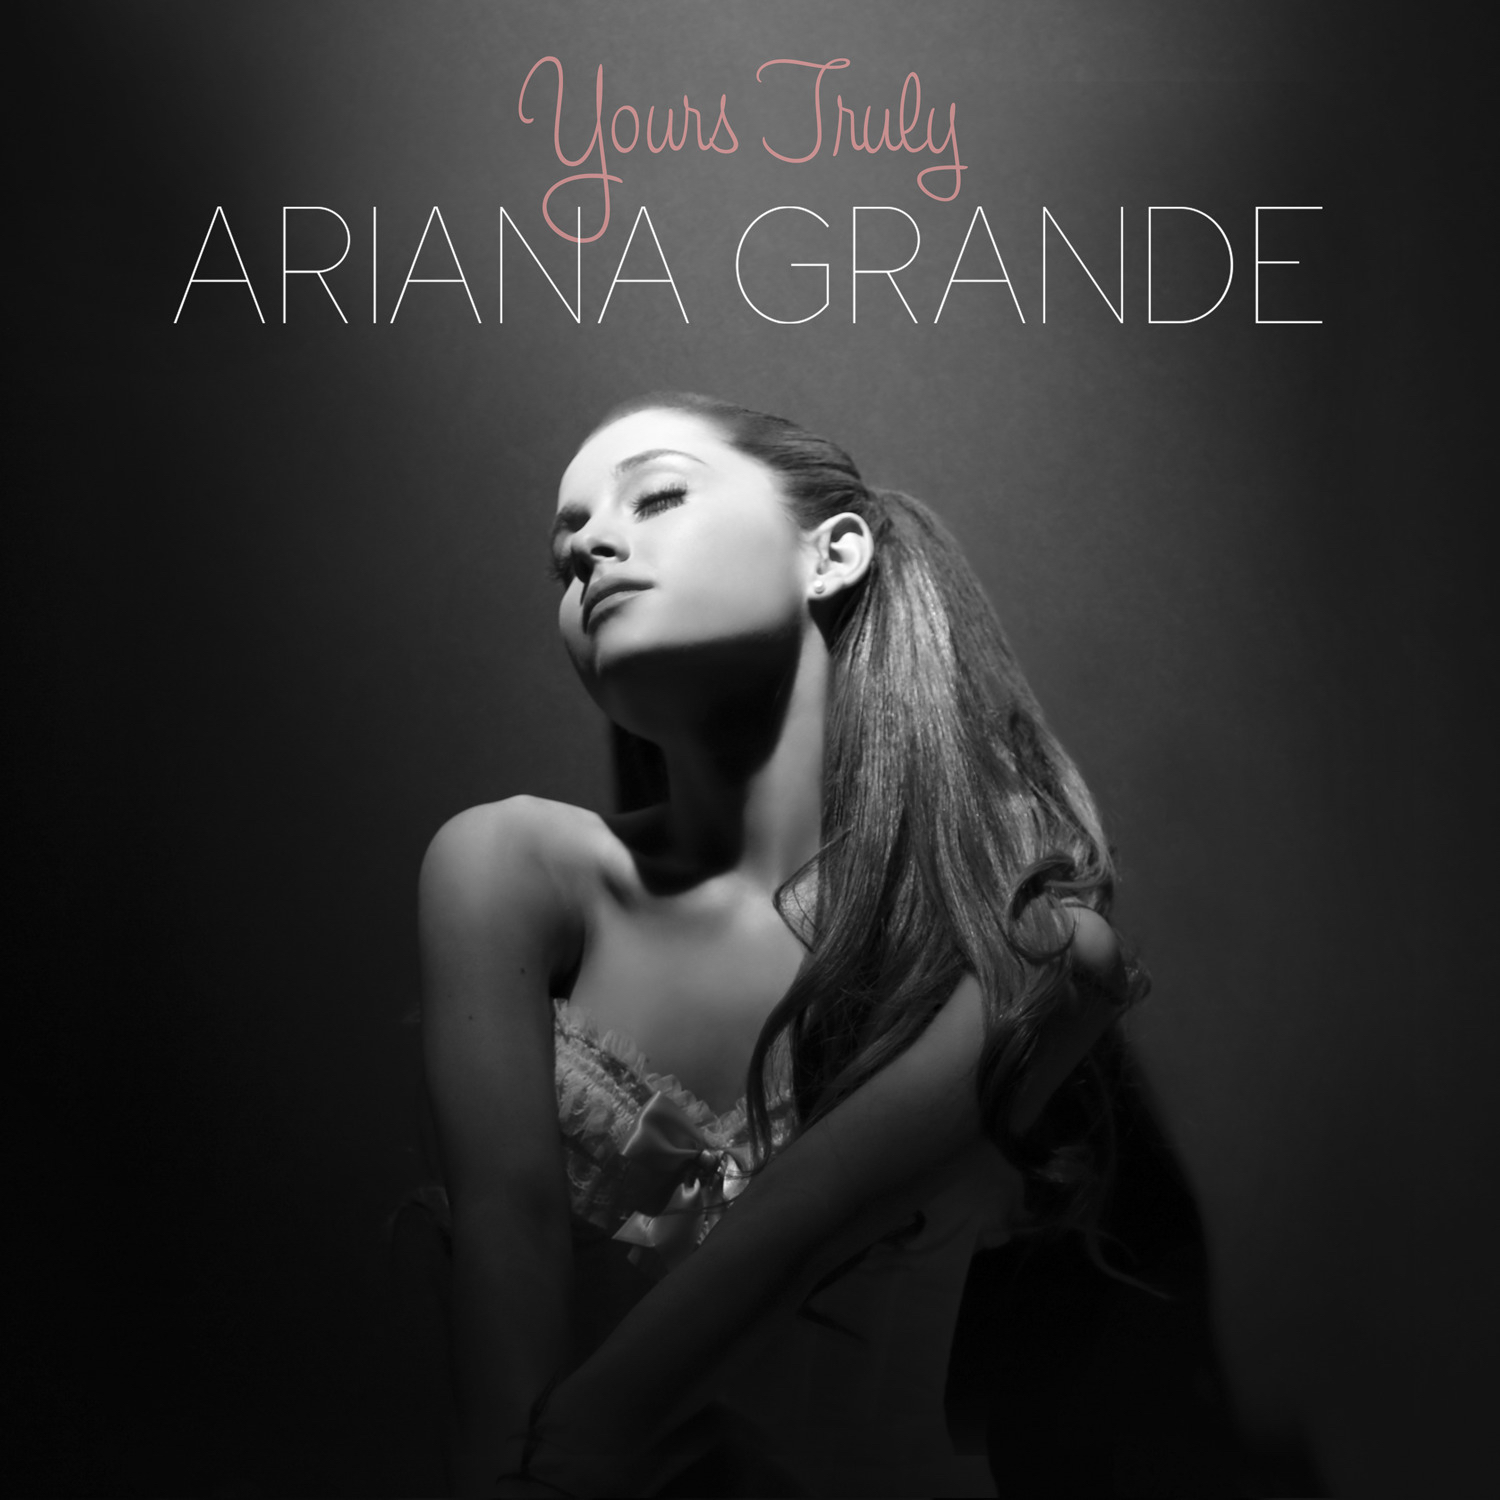 Ariana Grande — Better Left Unsaid cover artwork